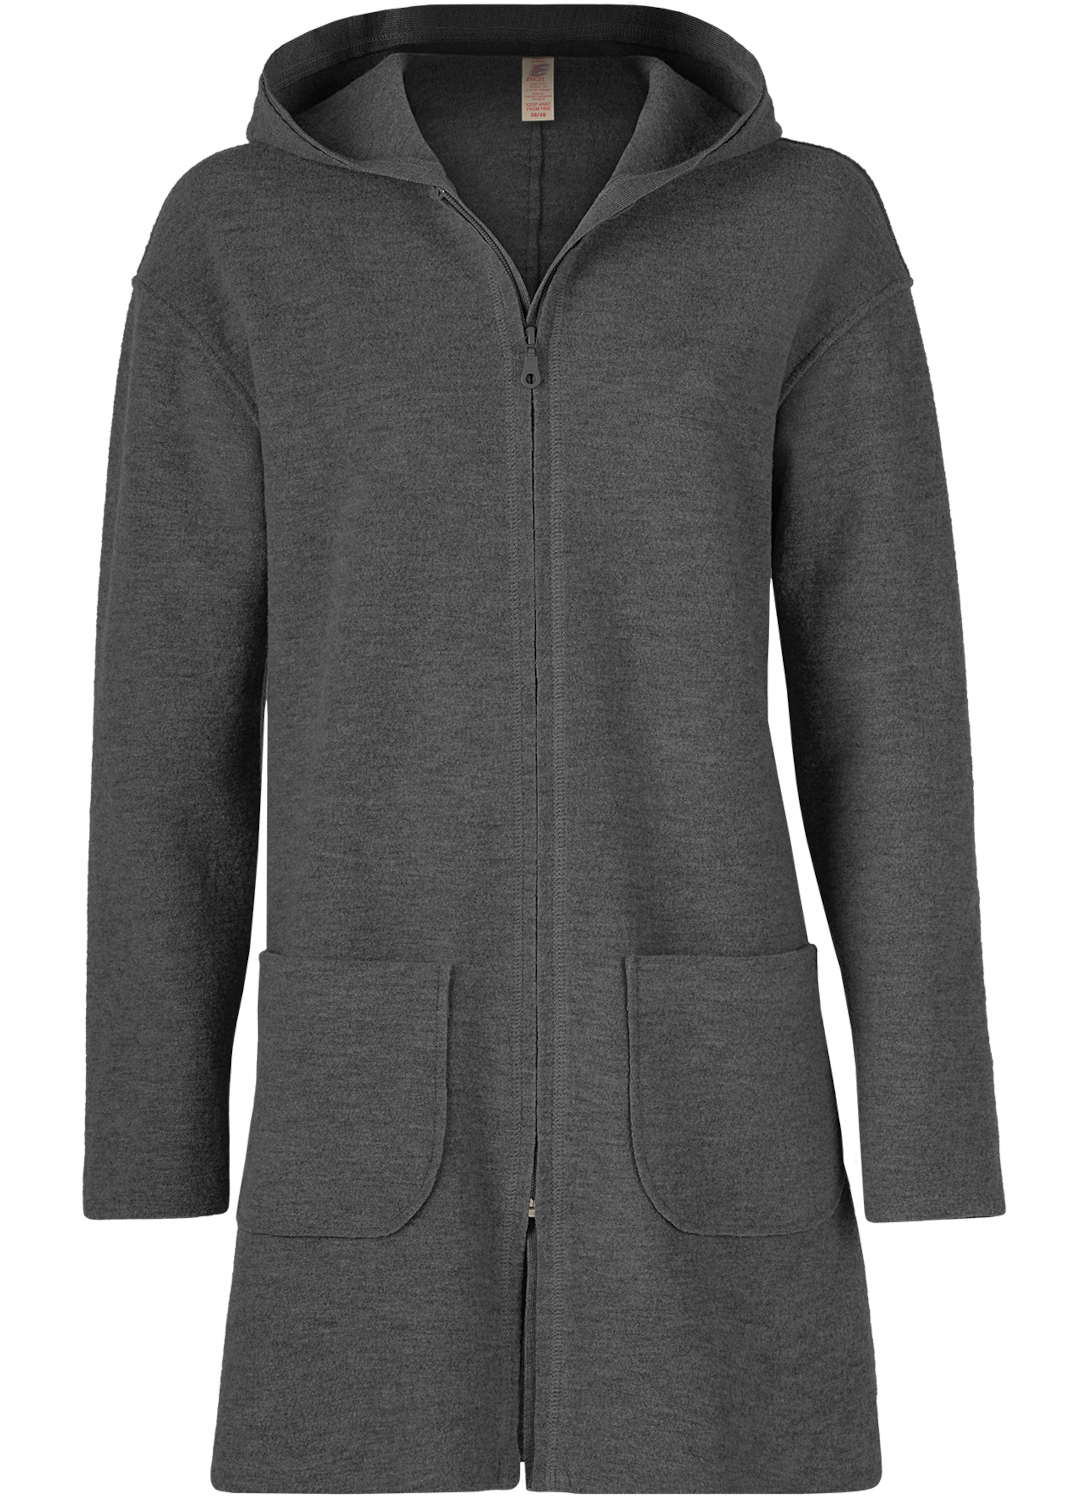 Woman coat in 100% organic boiled wool - Gray melange